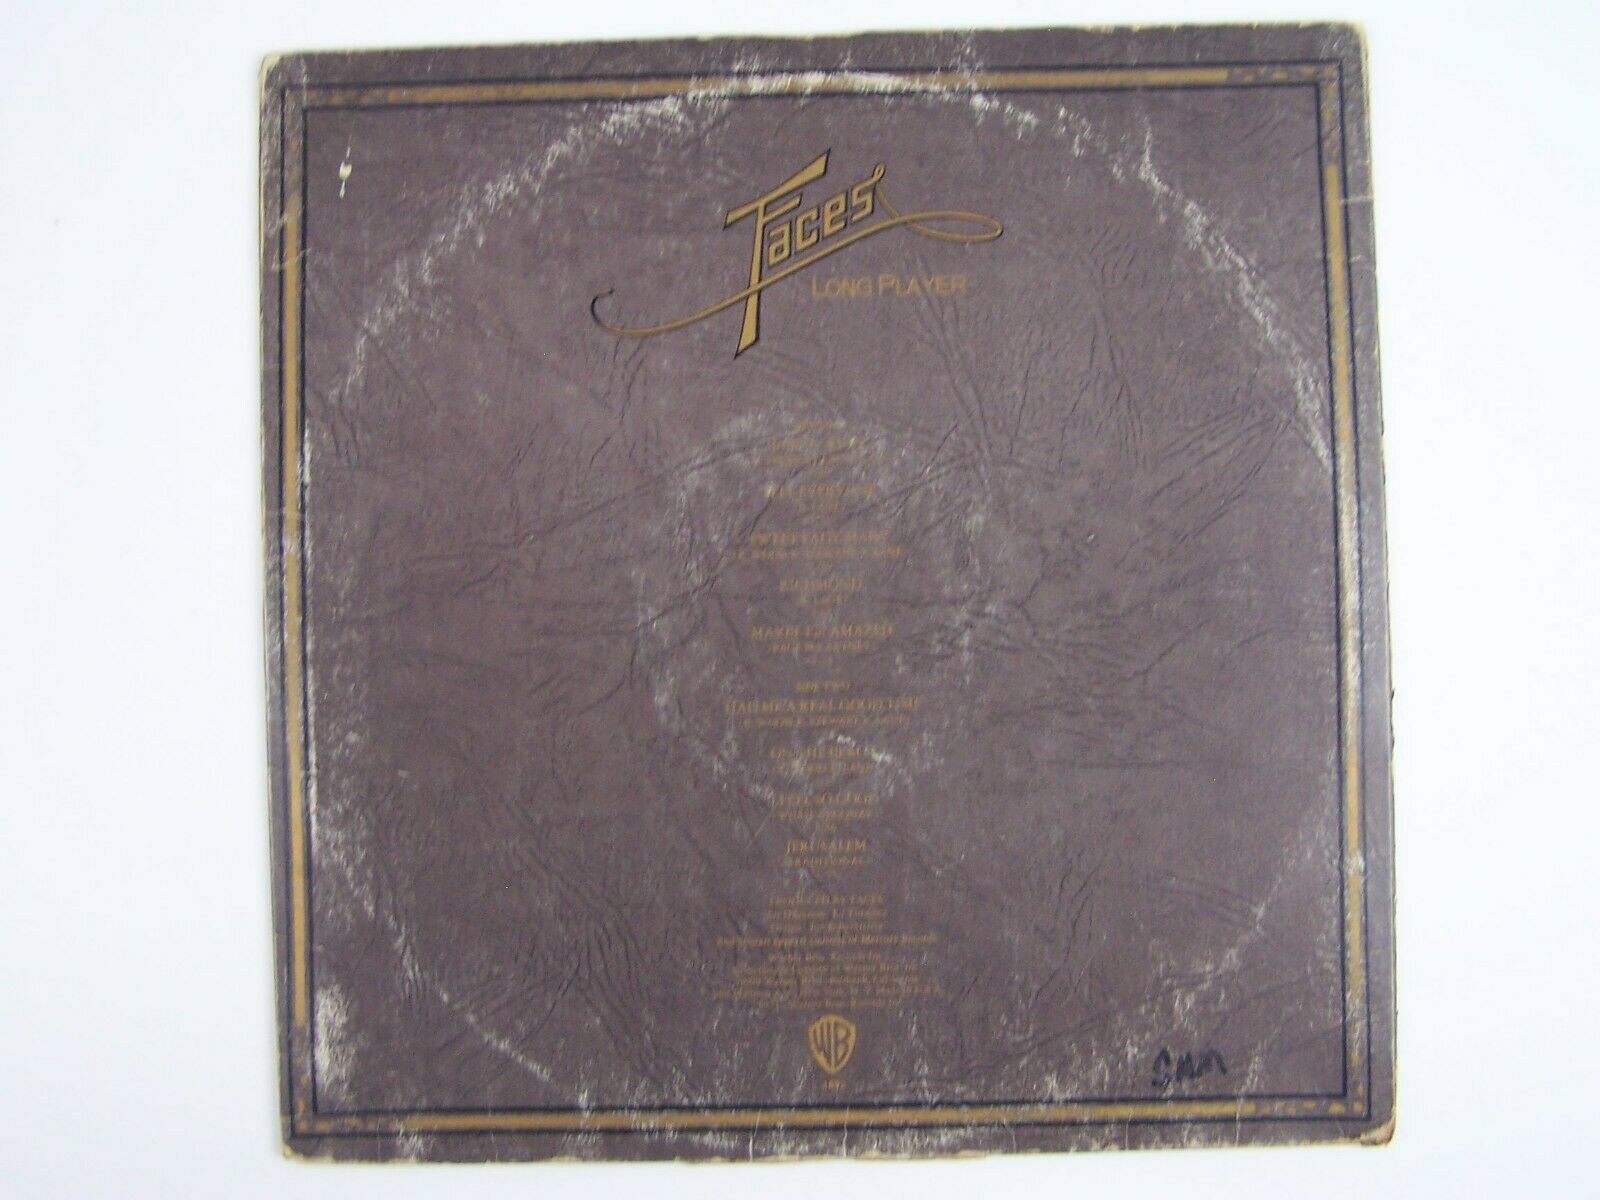 Faces - Long Player Vinyl LP Record Album WS-1892 - Records